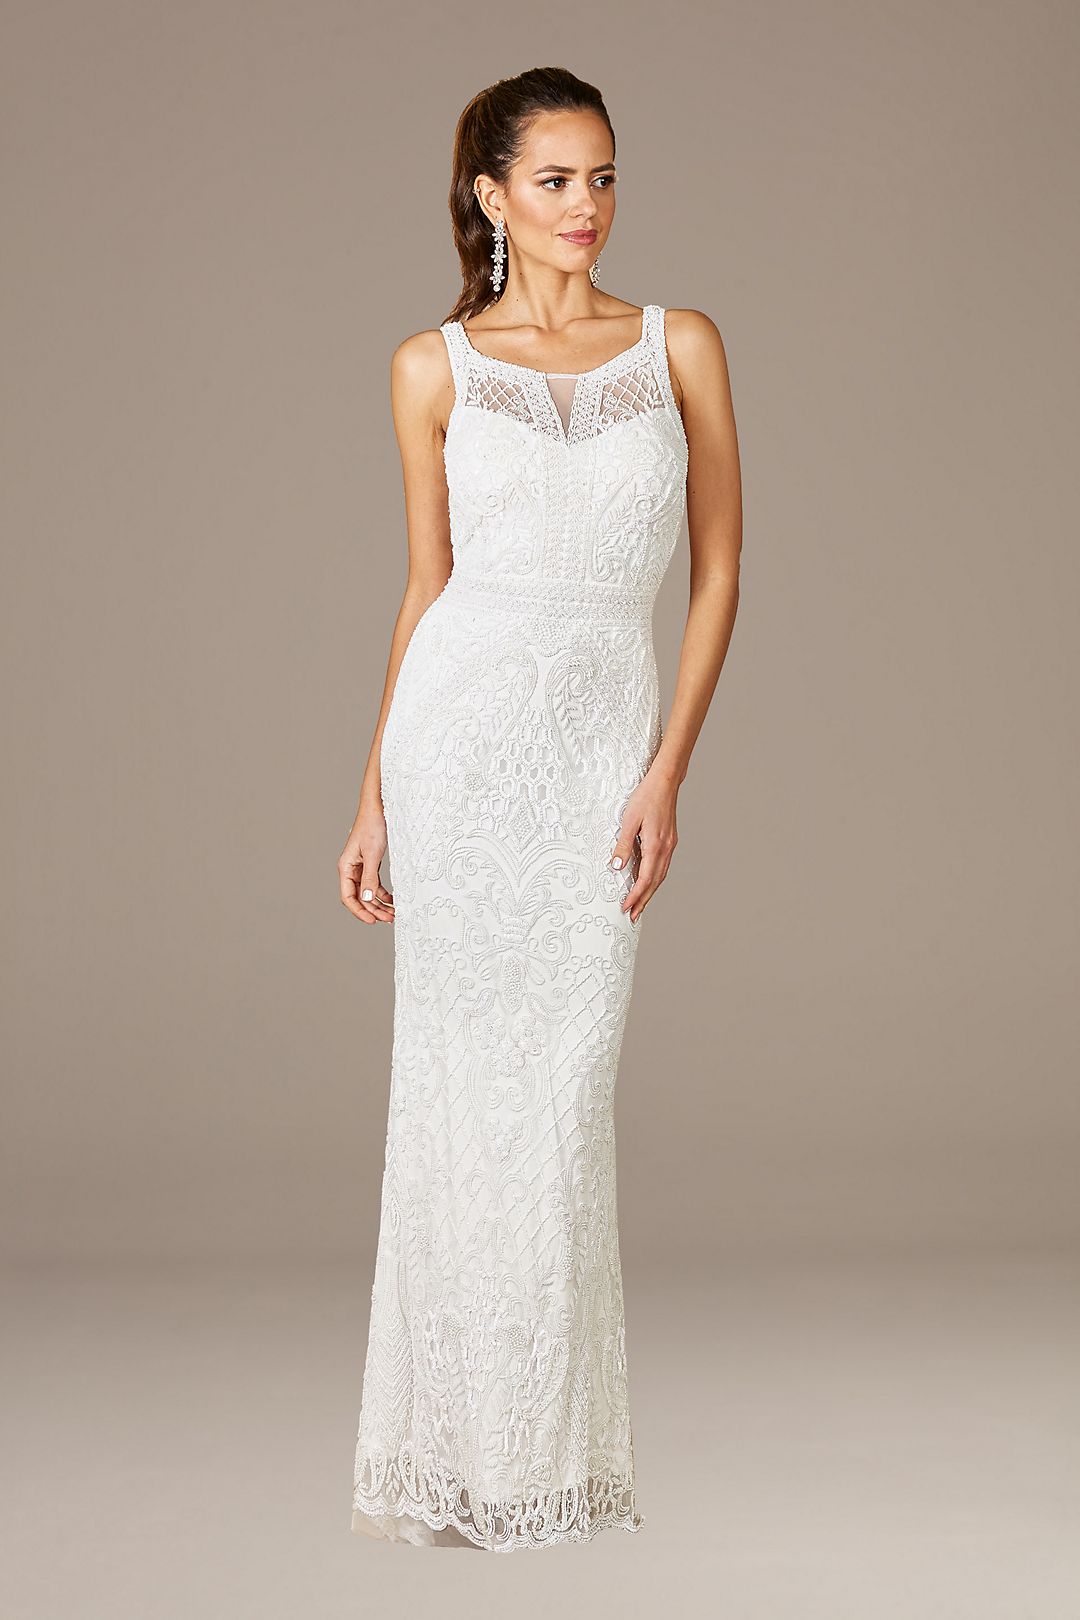 Lara Foster High-Neck Sleeveless Wedding Gown Image 1